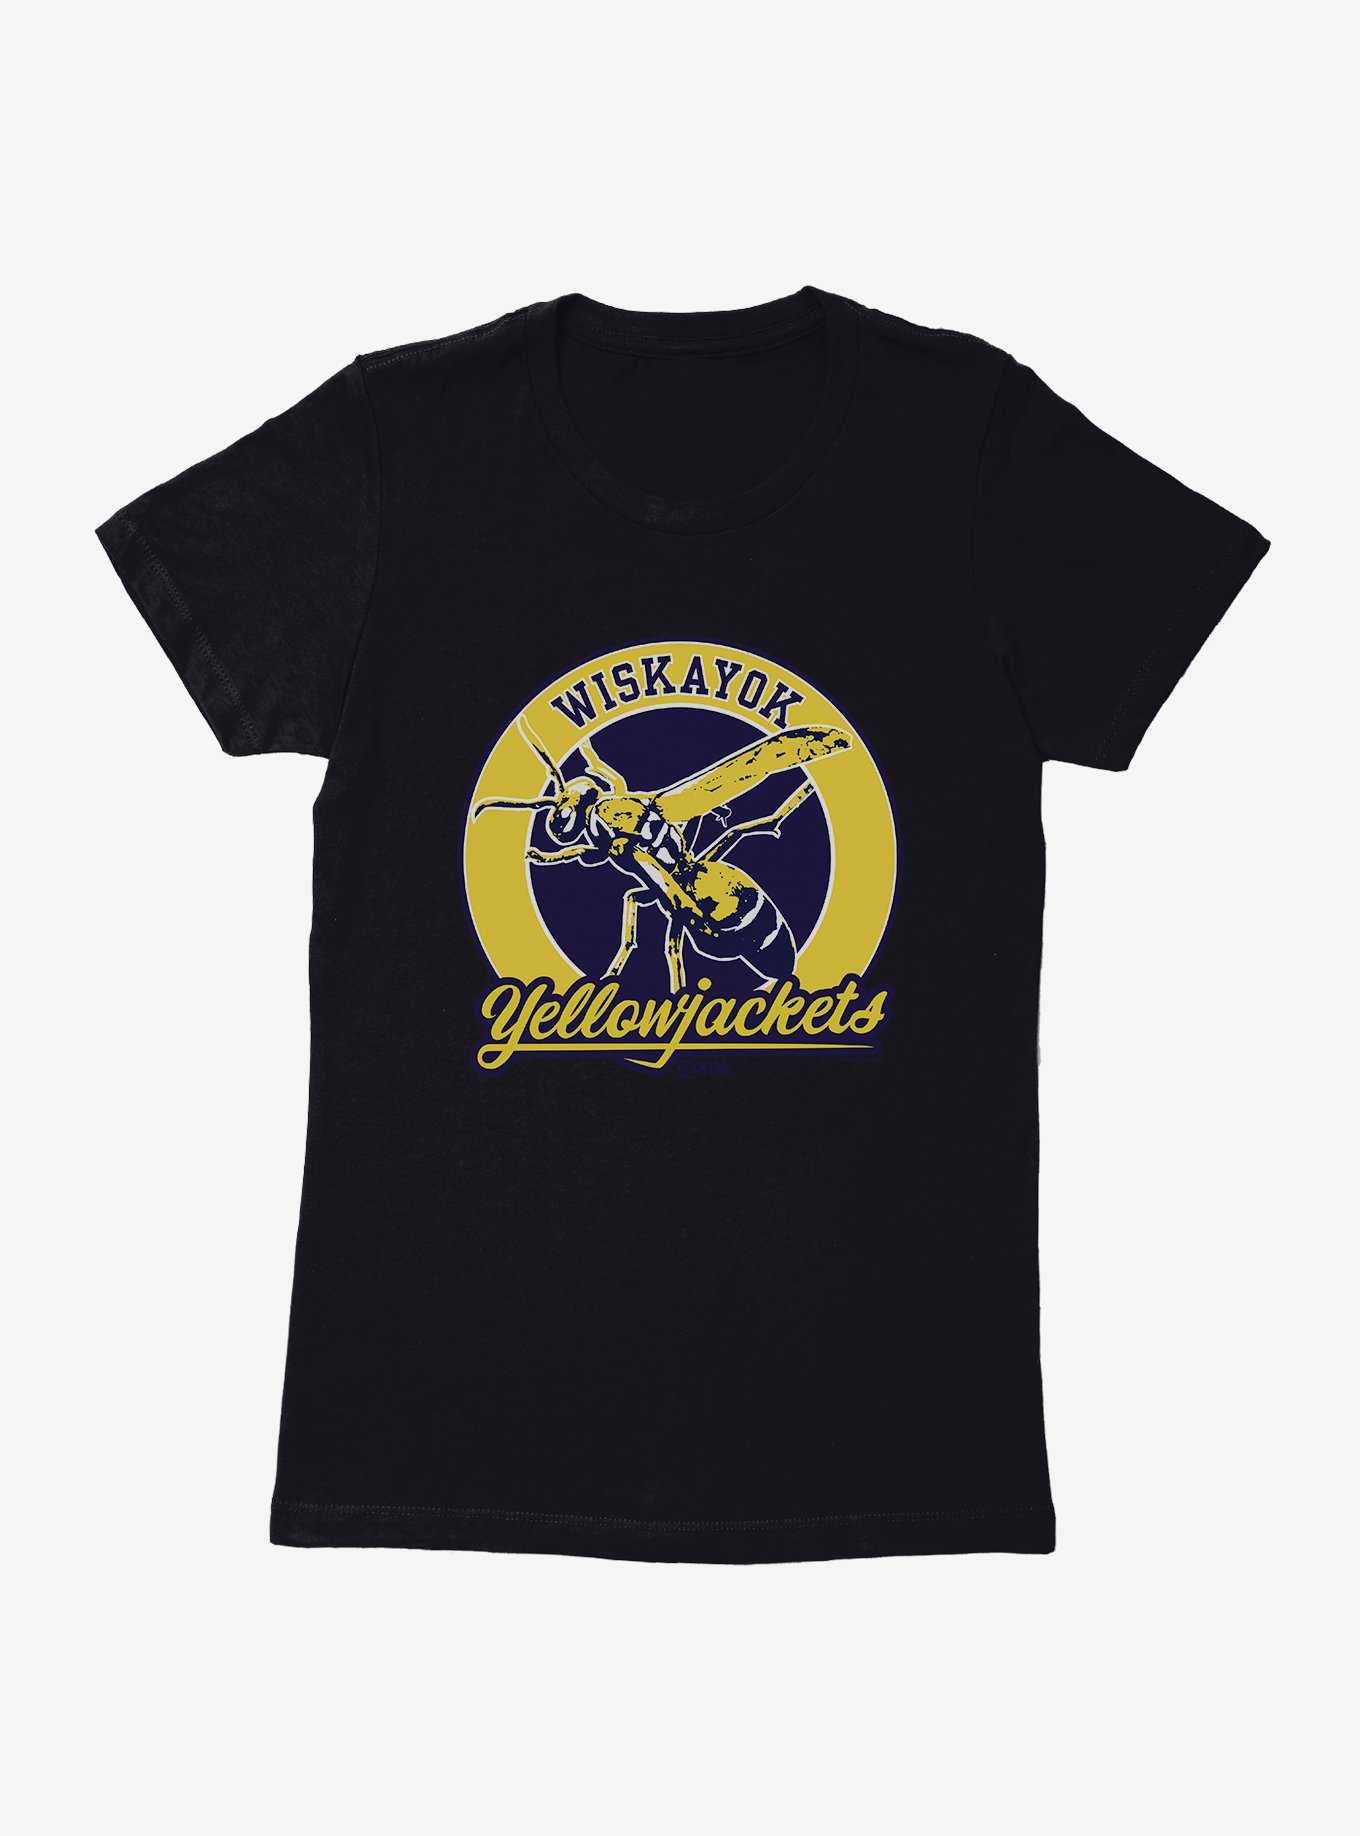 Yellowjackets Wiskayok Mascot Womens T-Shirt, , hi-res